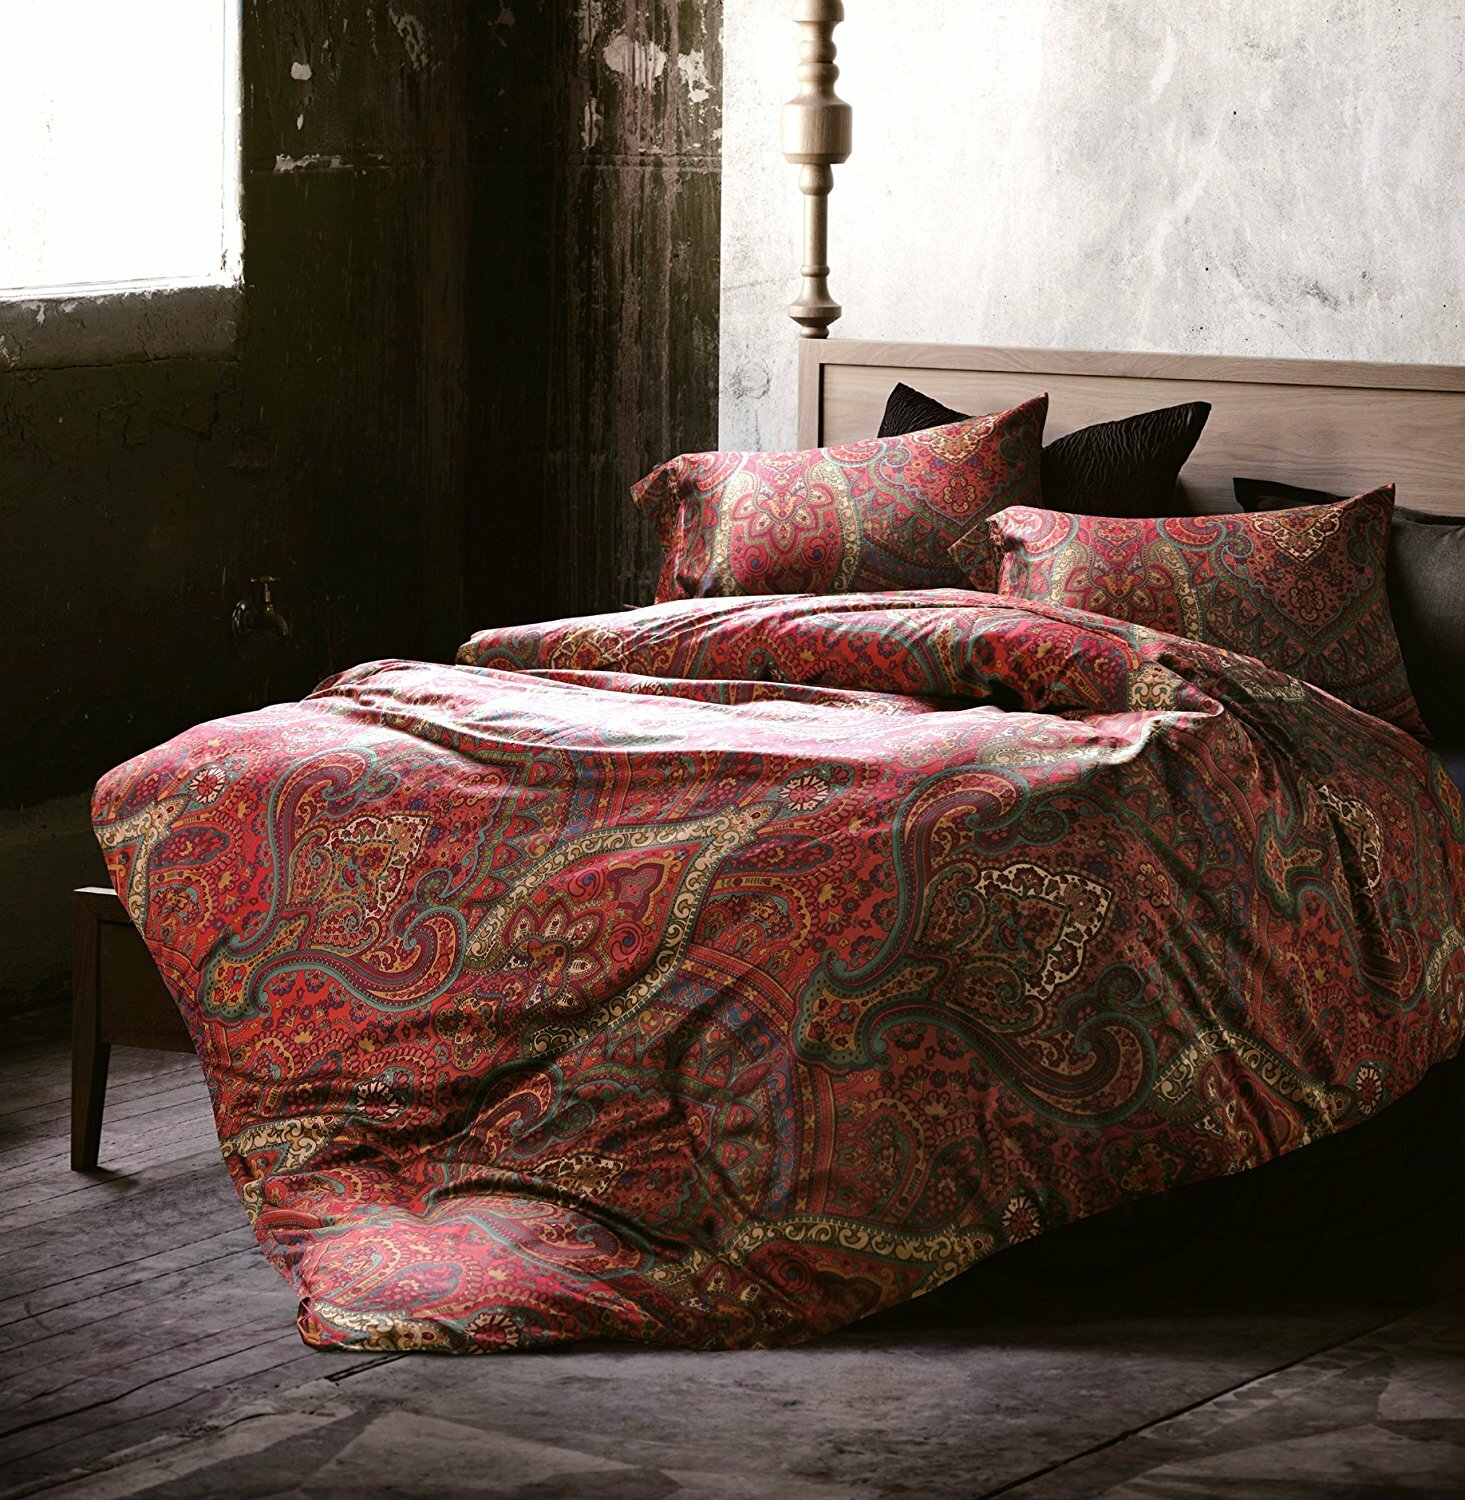 Queen size Blanket Bedding Bedspread Indian Mandala Duvet Cover Details about   Quilt Cover 